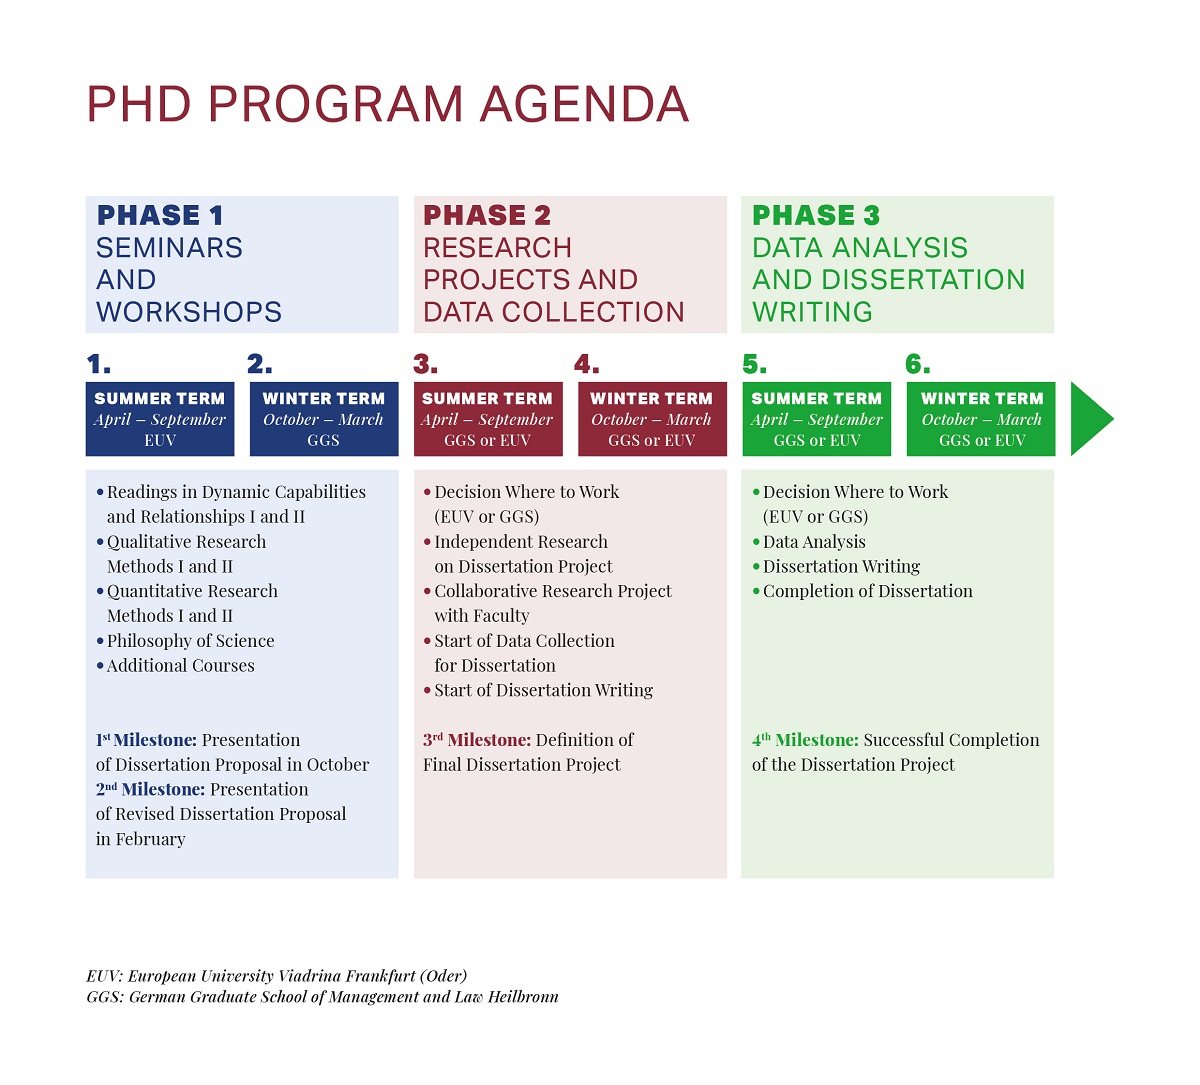 phd-program-agenda-2015 ©DCR | minkadu Kommunikationsdesign Bolte, Strehmann & Todt GbR